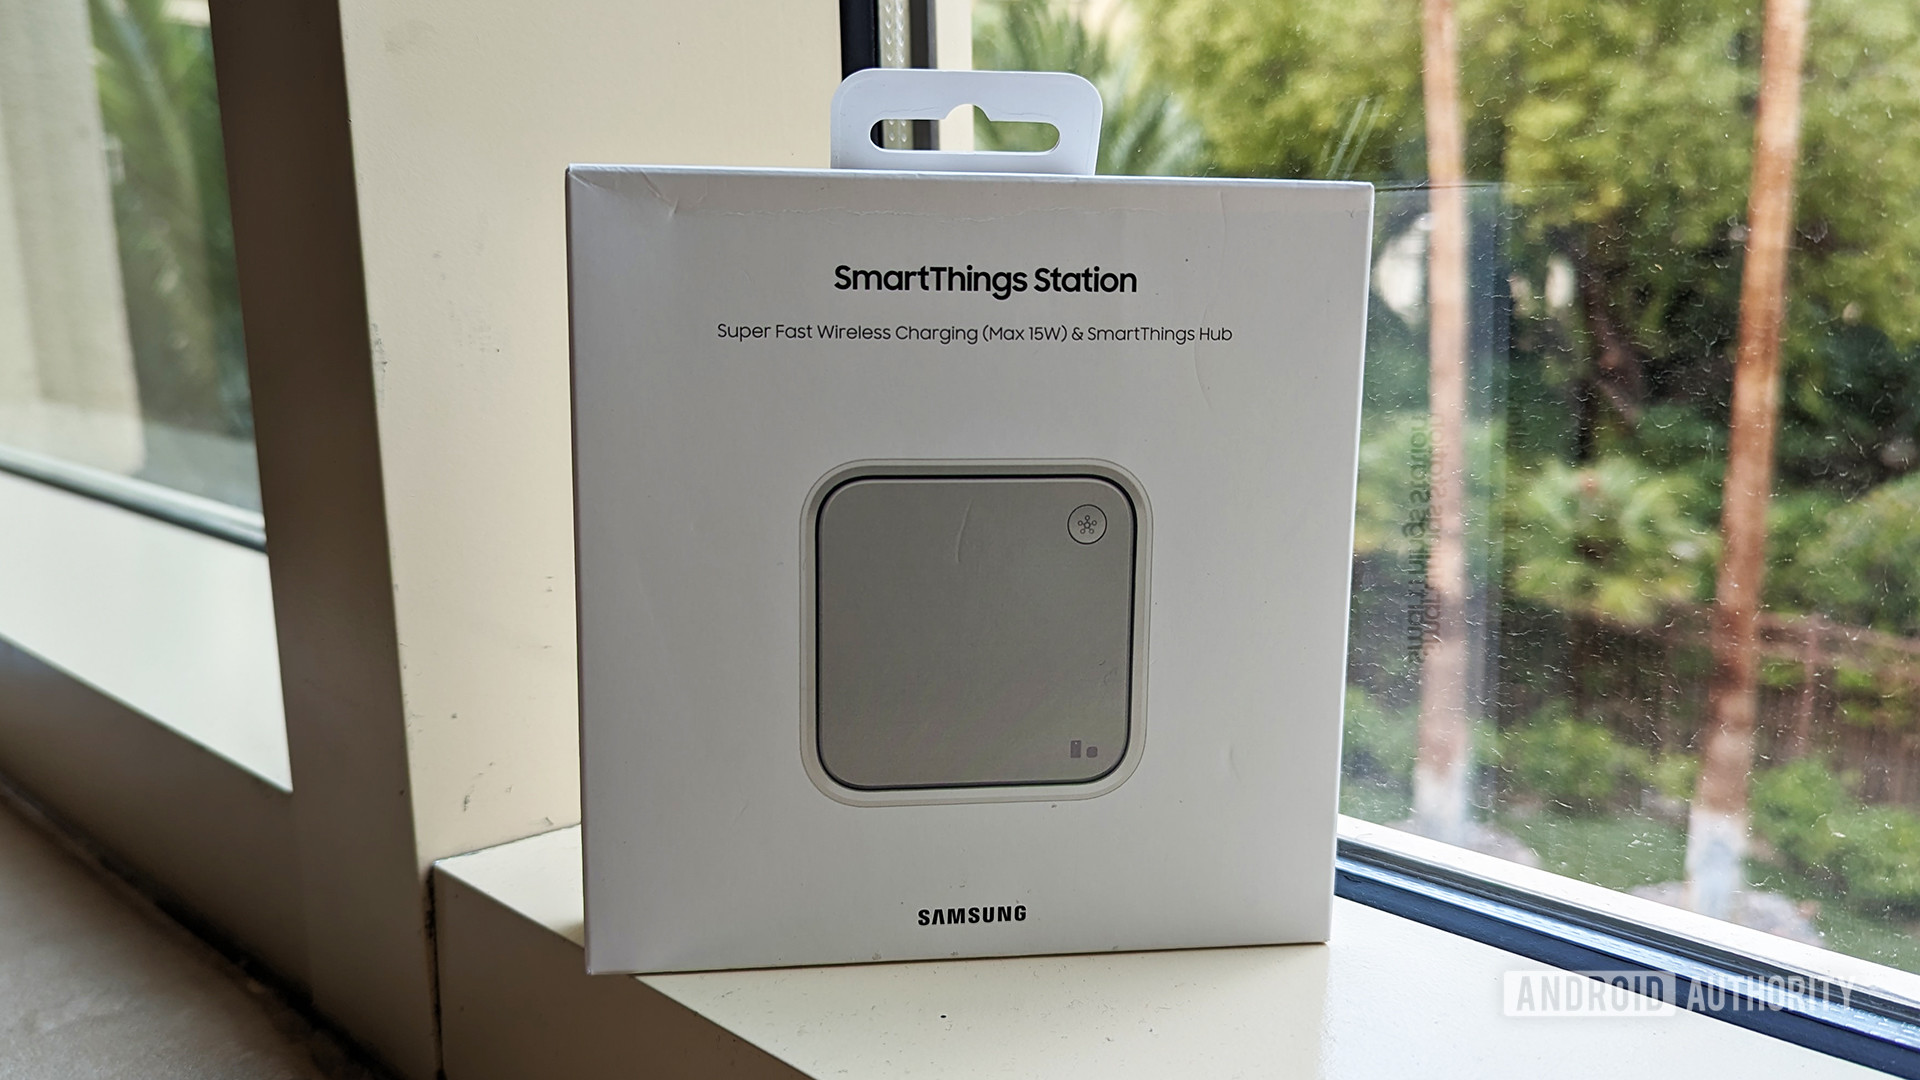 Samsung SmartThings Station Retail Box